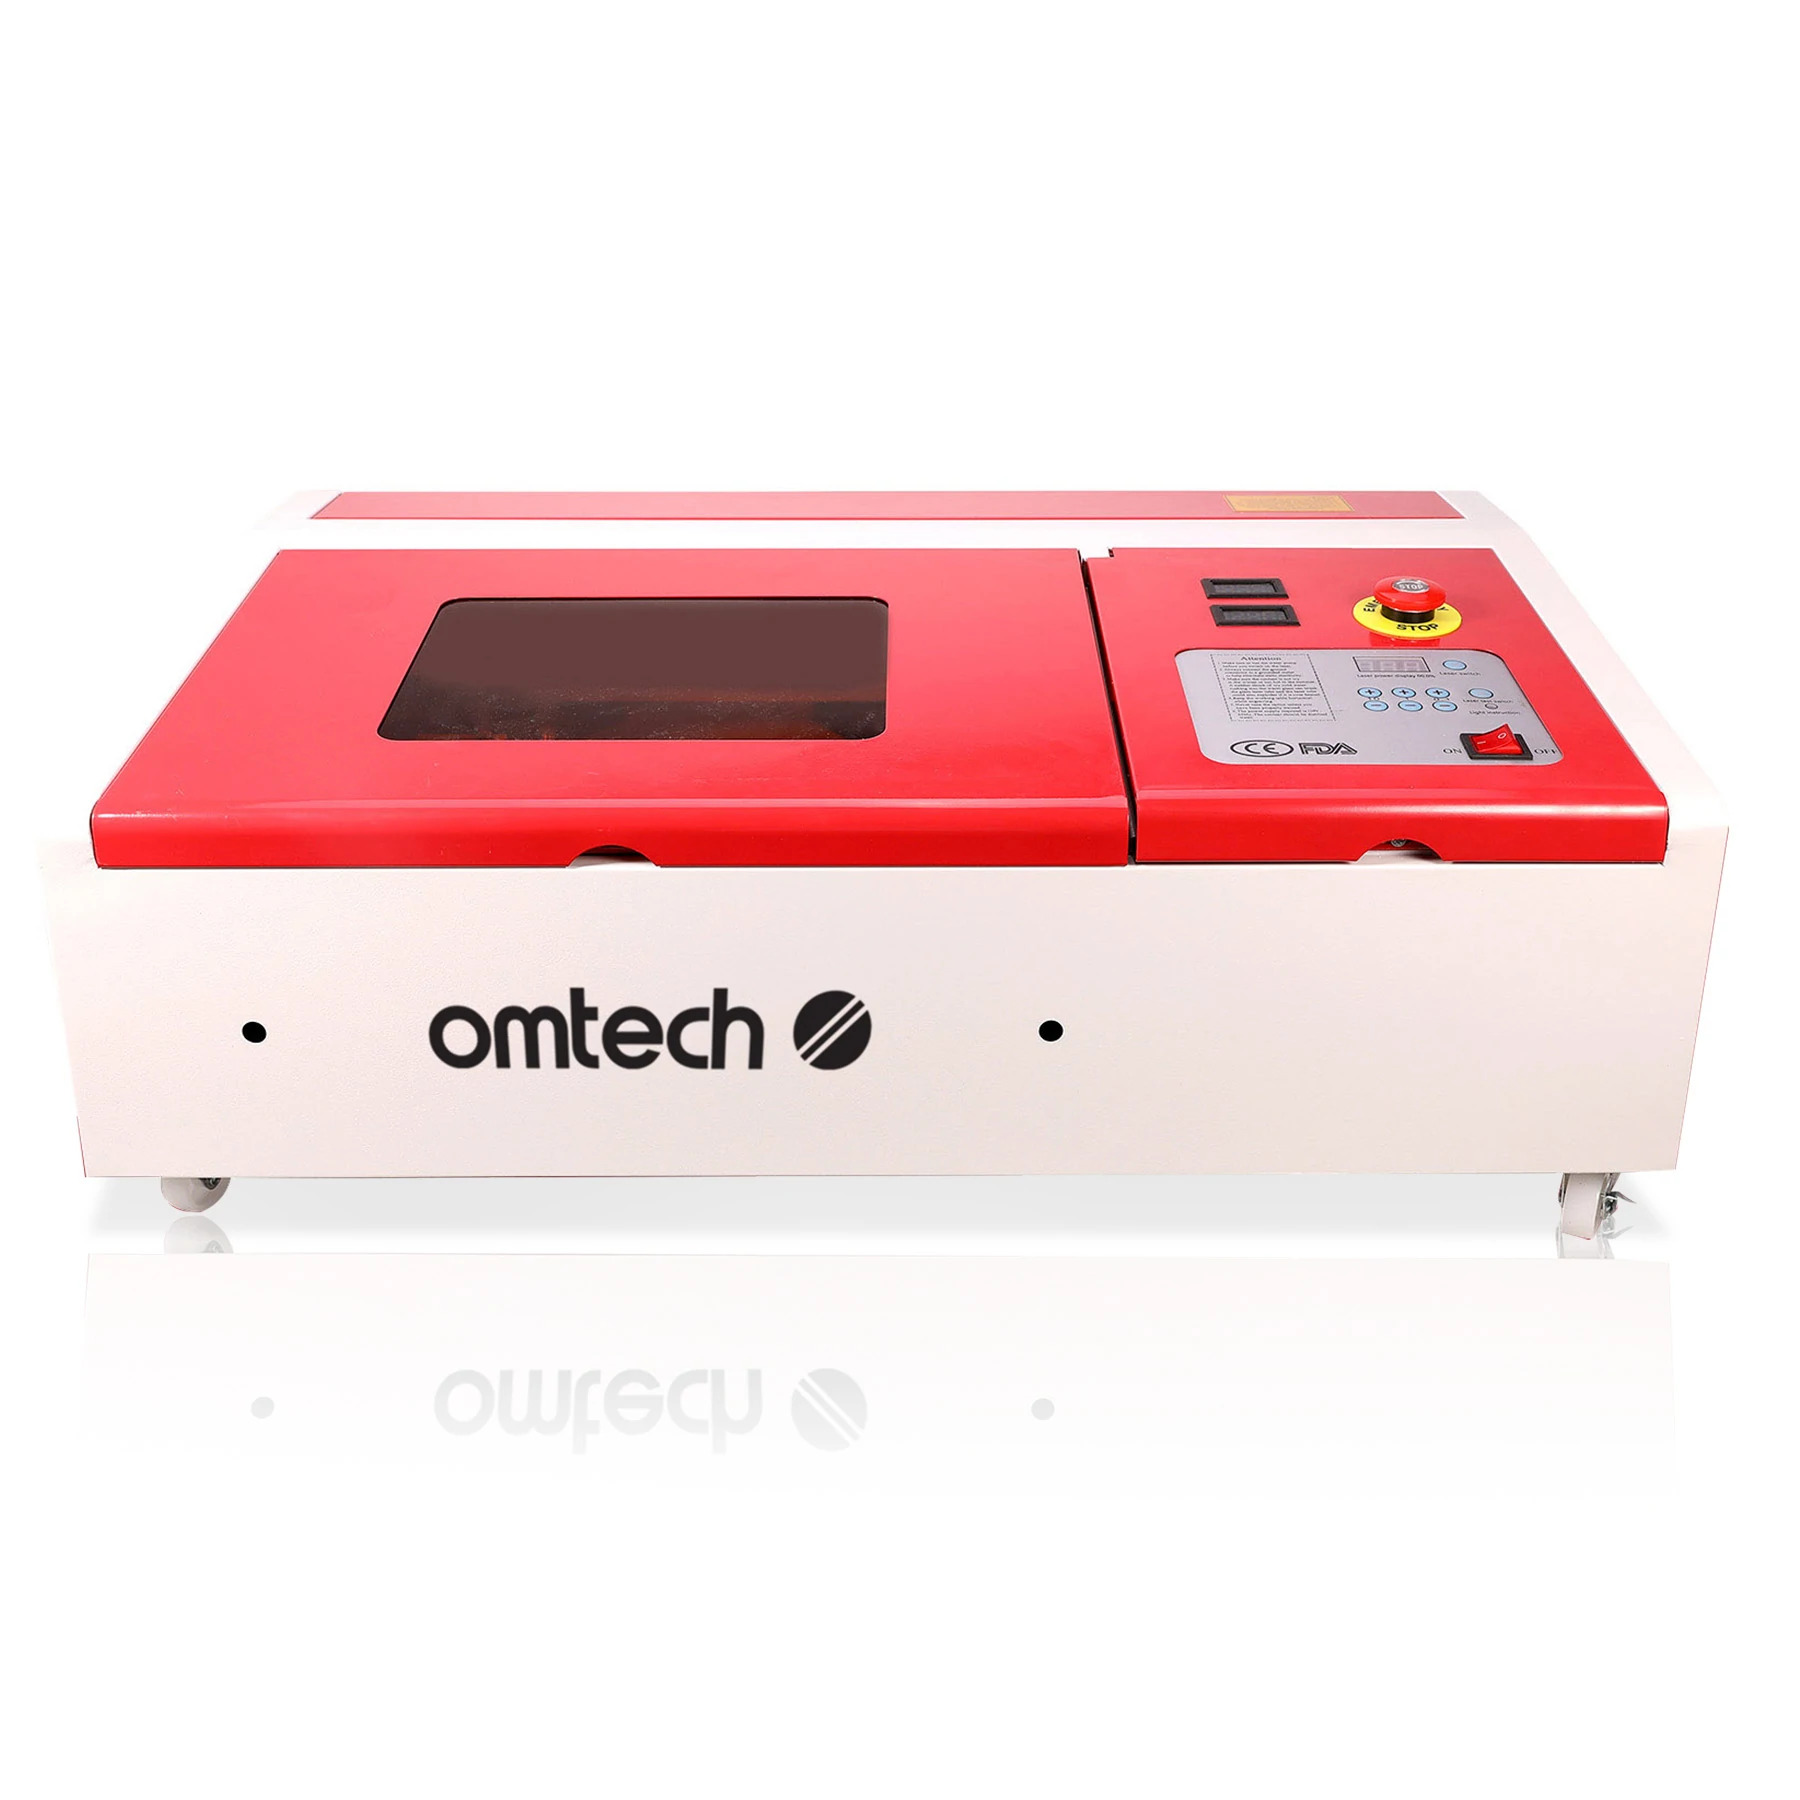 Omtech Laser Set Up and Upgrades 